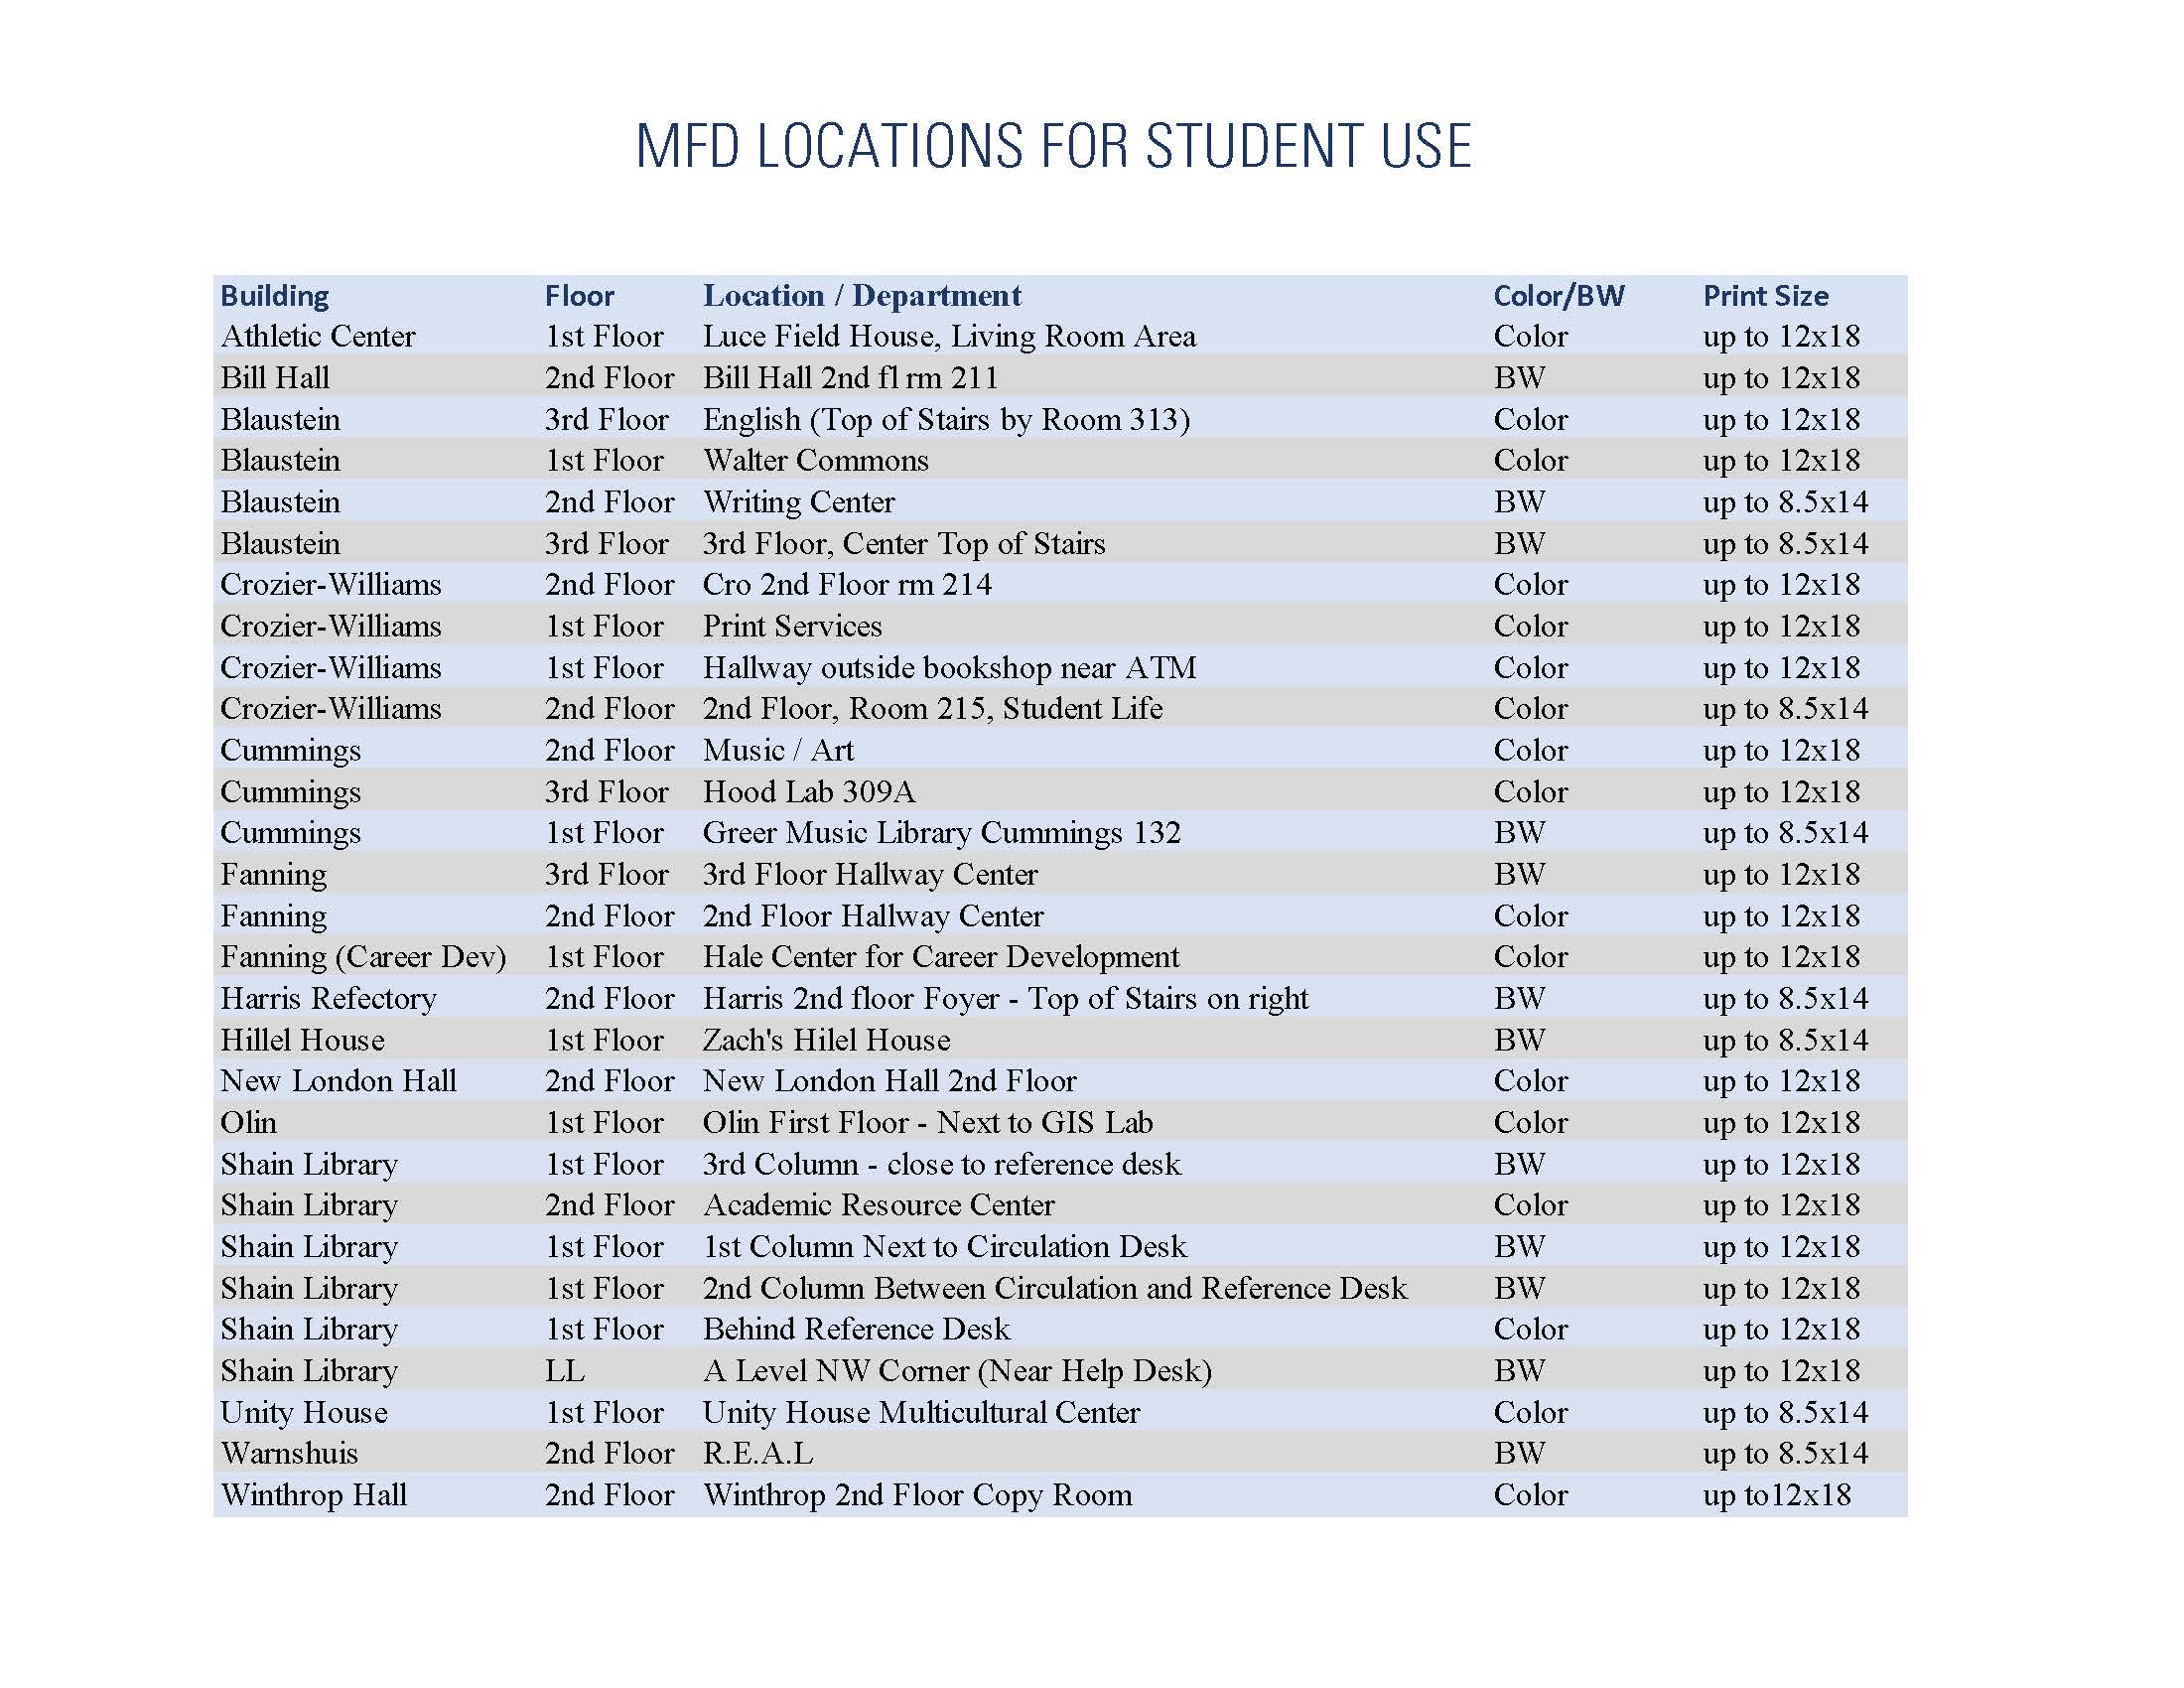 STUDENT PRINT LOCATIONS MFDS